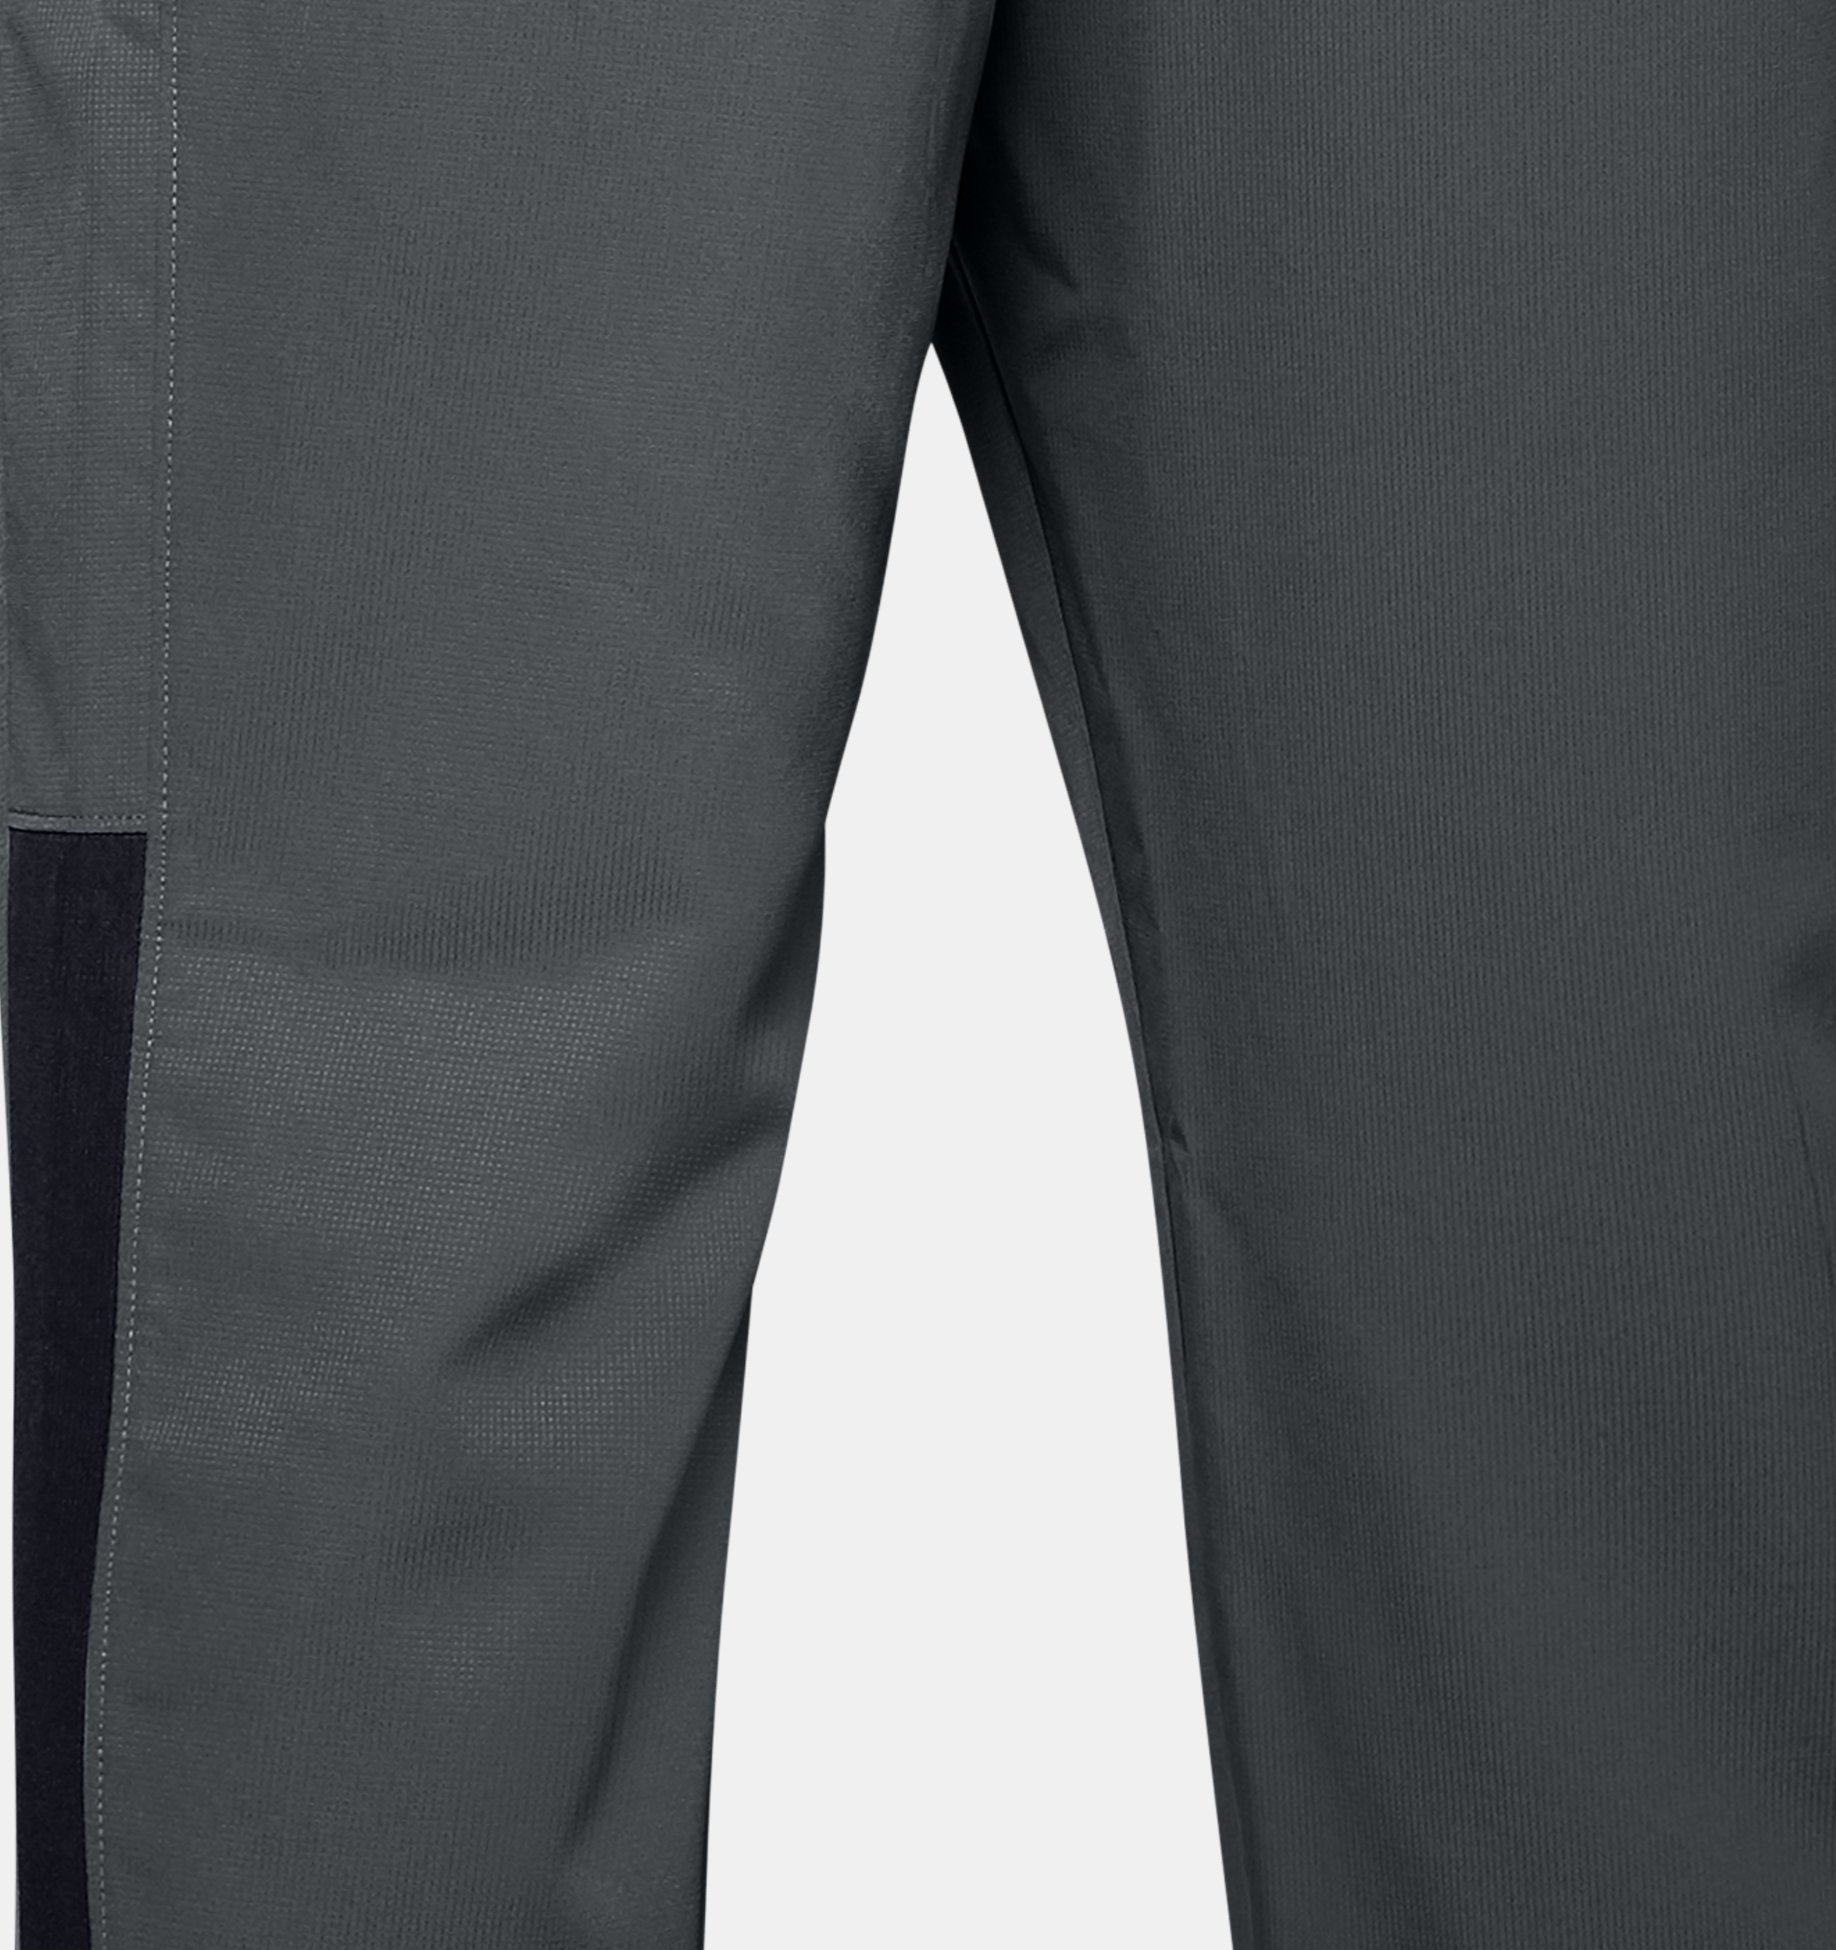 Under Armour Men's Woven Vital Workout Pants Black Size Xx-large Tall Kvxv  for sale online